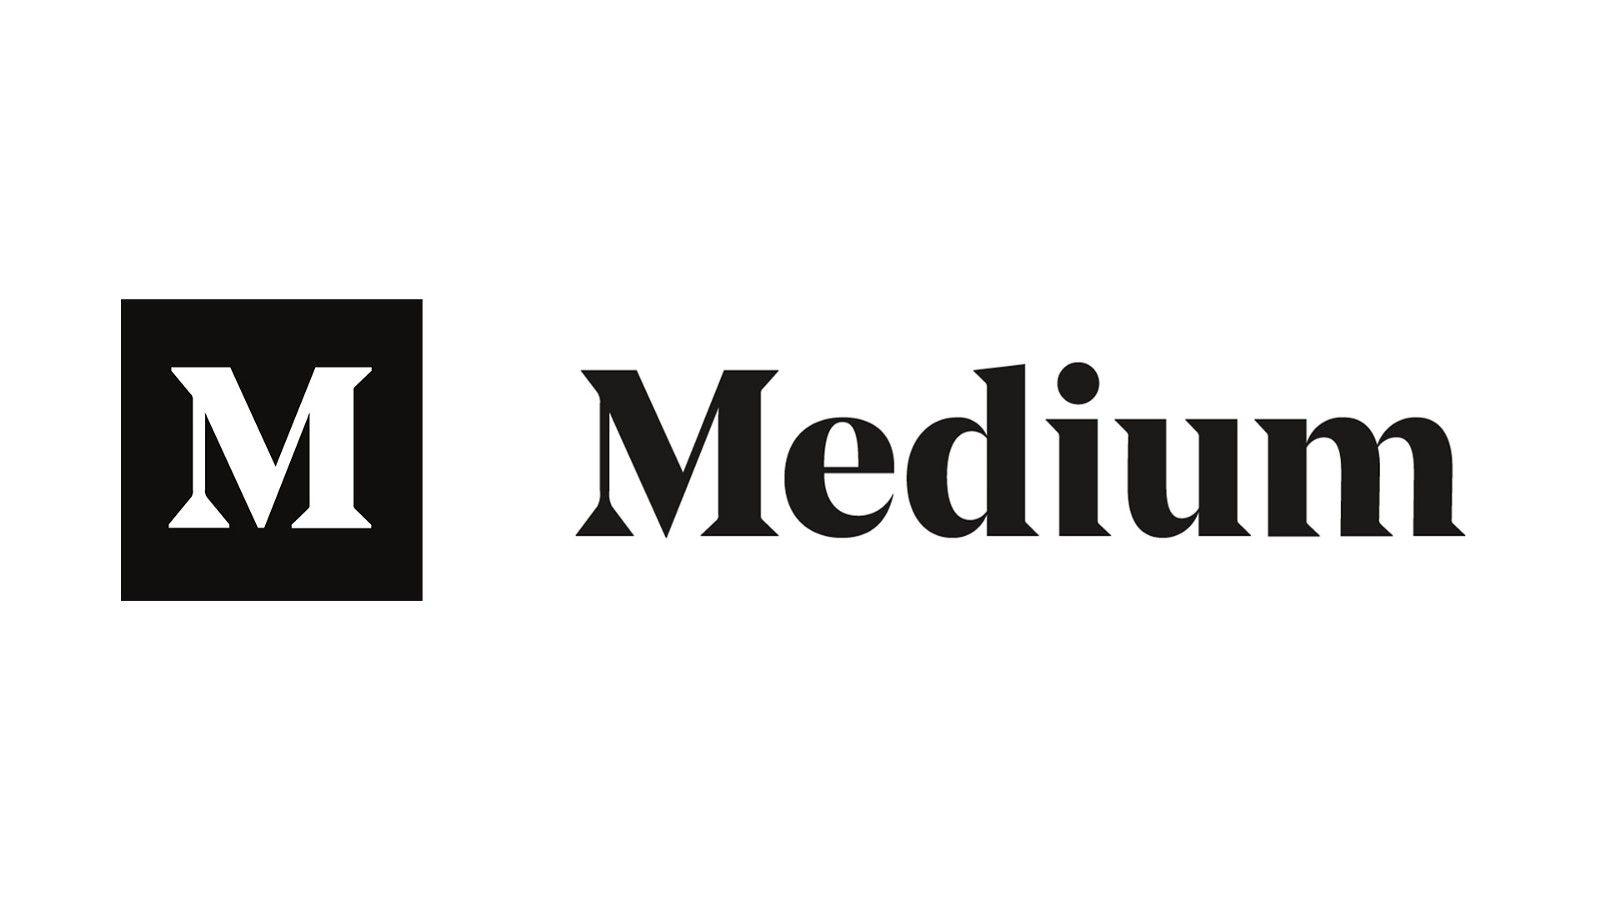 Medium Logo - My Thoughts on The New Medium Logo